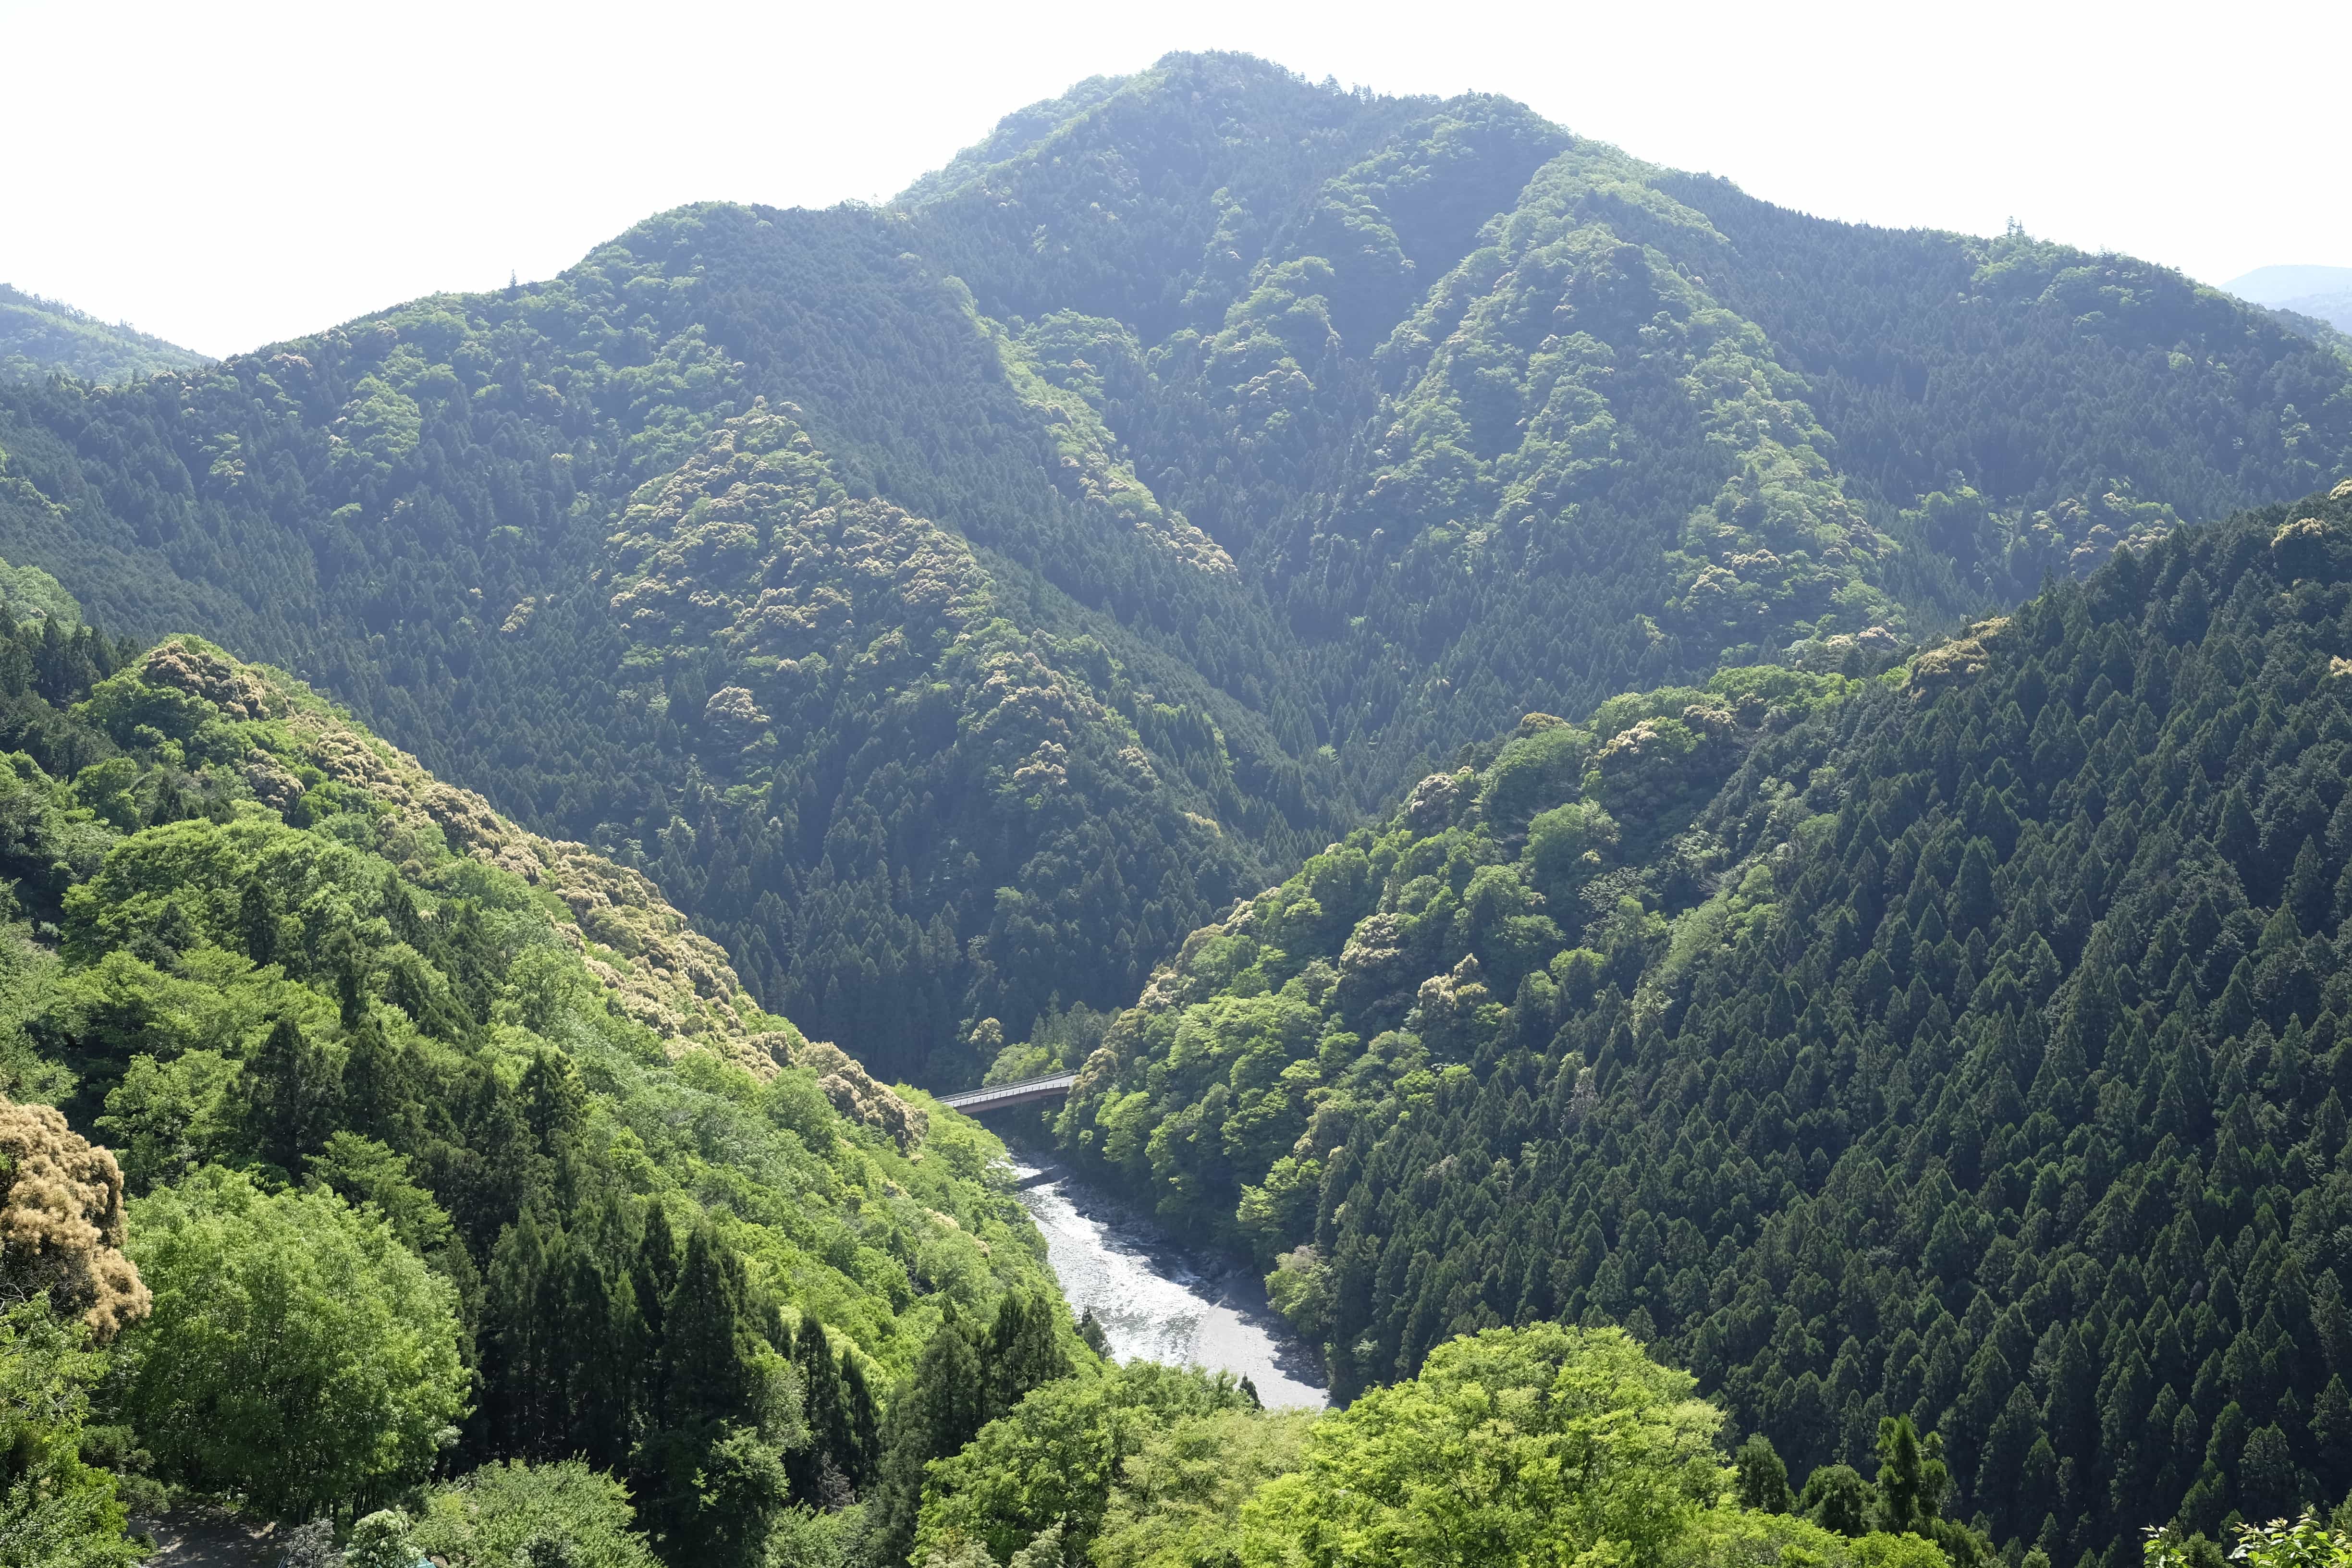 Kamiyama valley